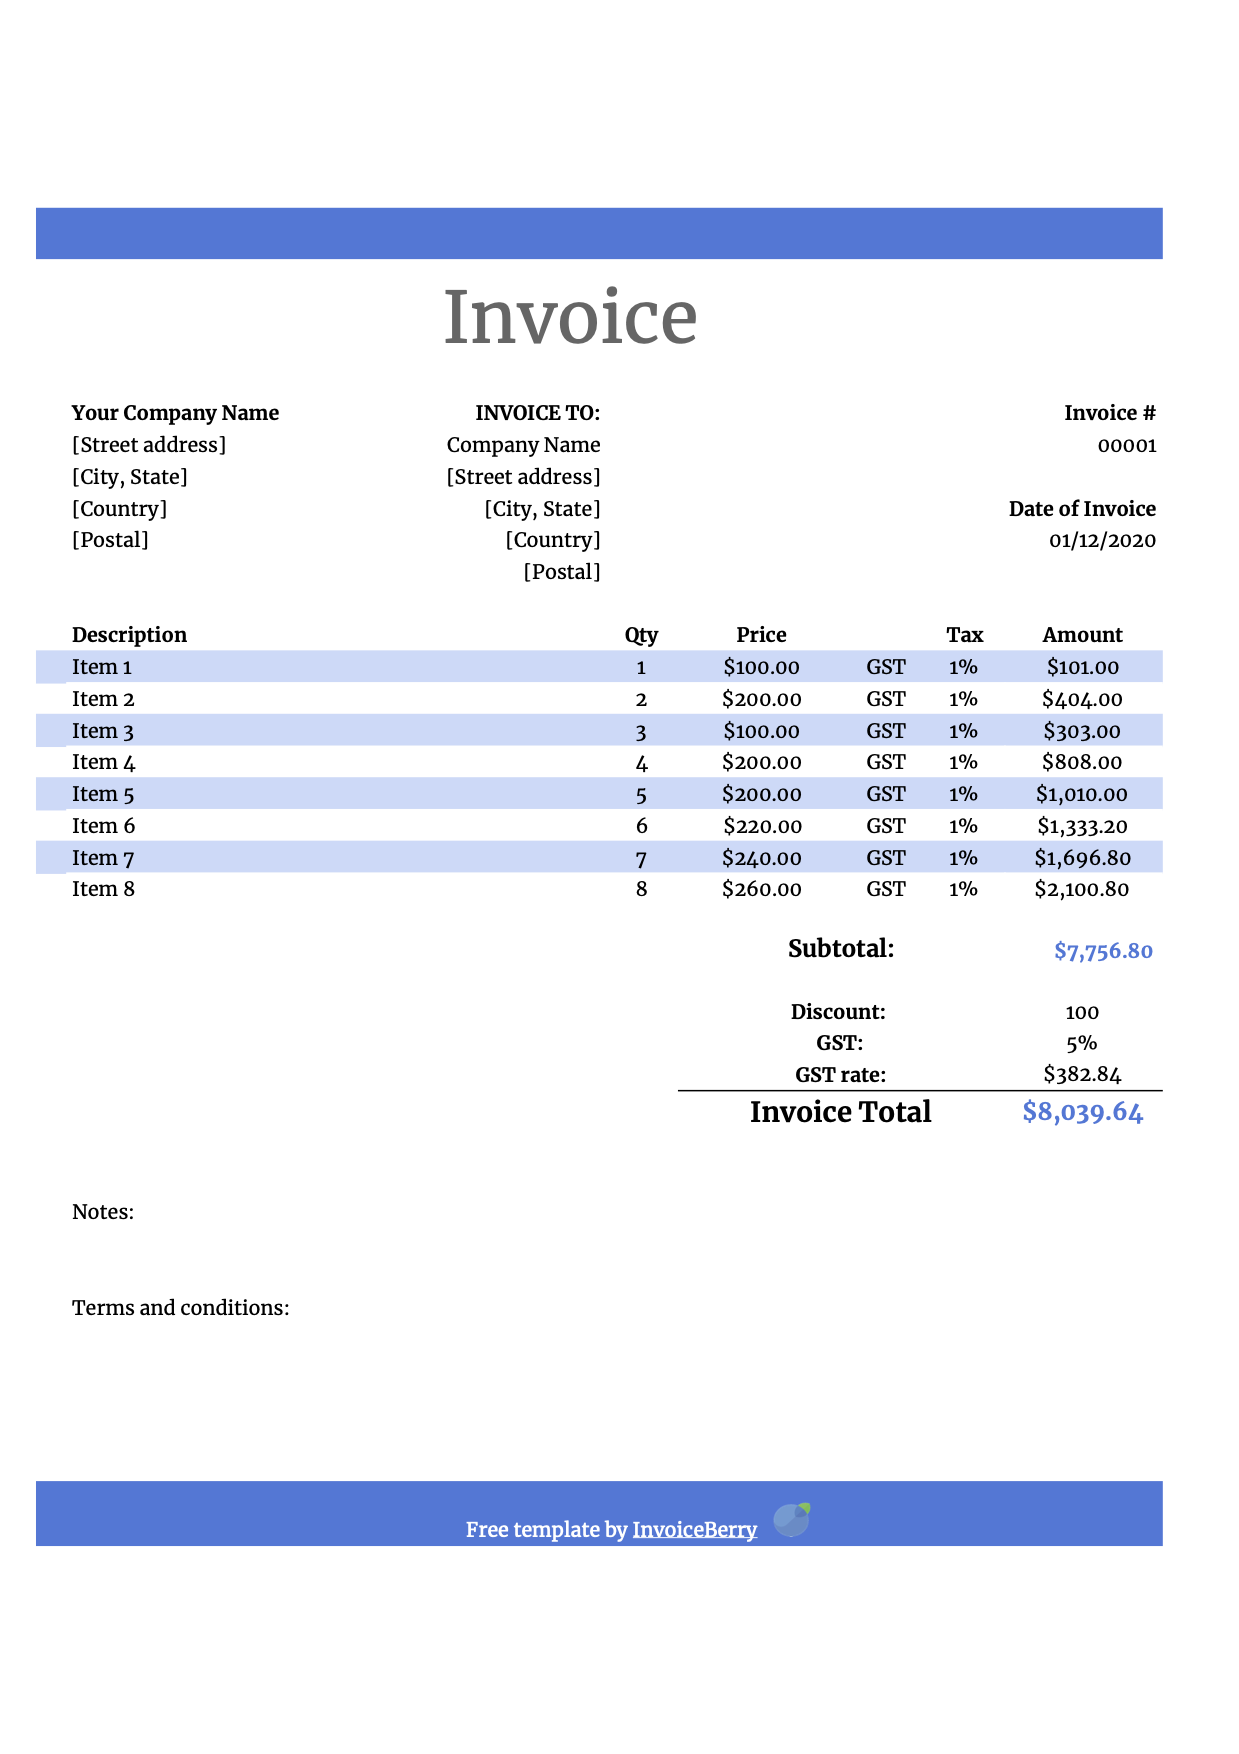 Free Google Drive Invoice Templates: Blank Docs & Sheets Invoices For Invoice Template Google Doc